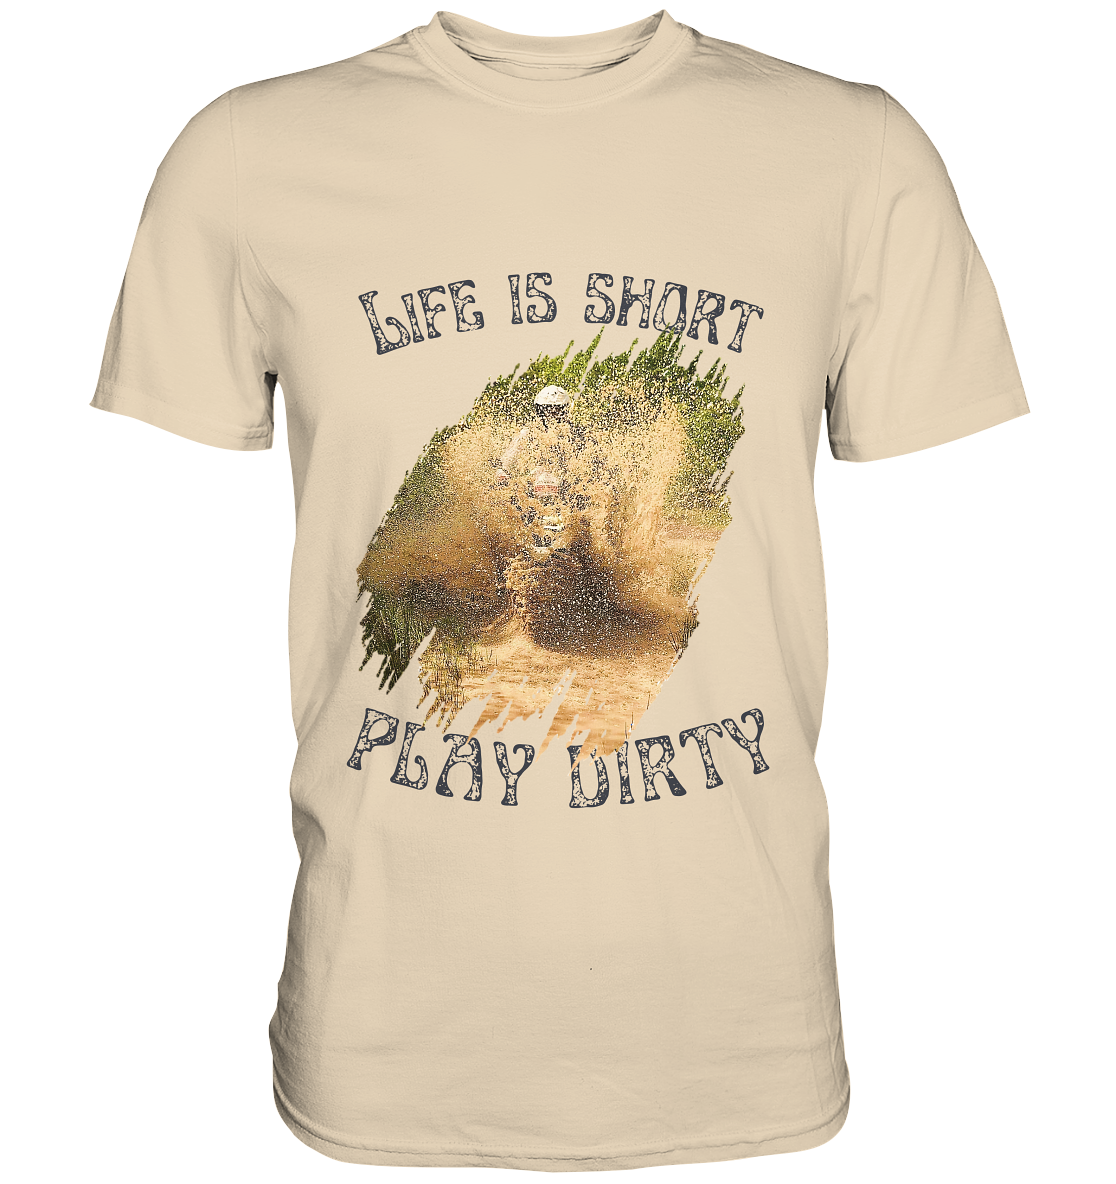 "Life is short - play dirty" 1 _ dunkles Design | Shirt für Jürgen P.